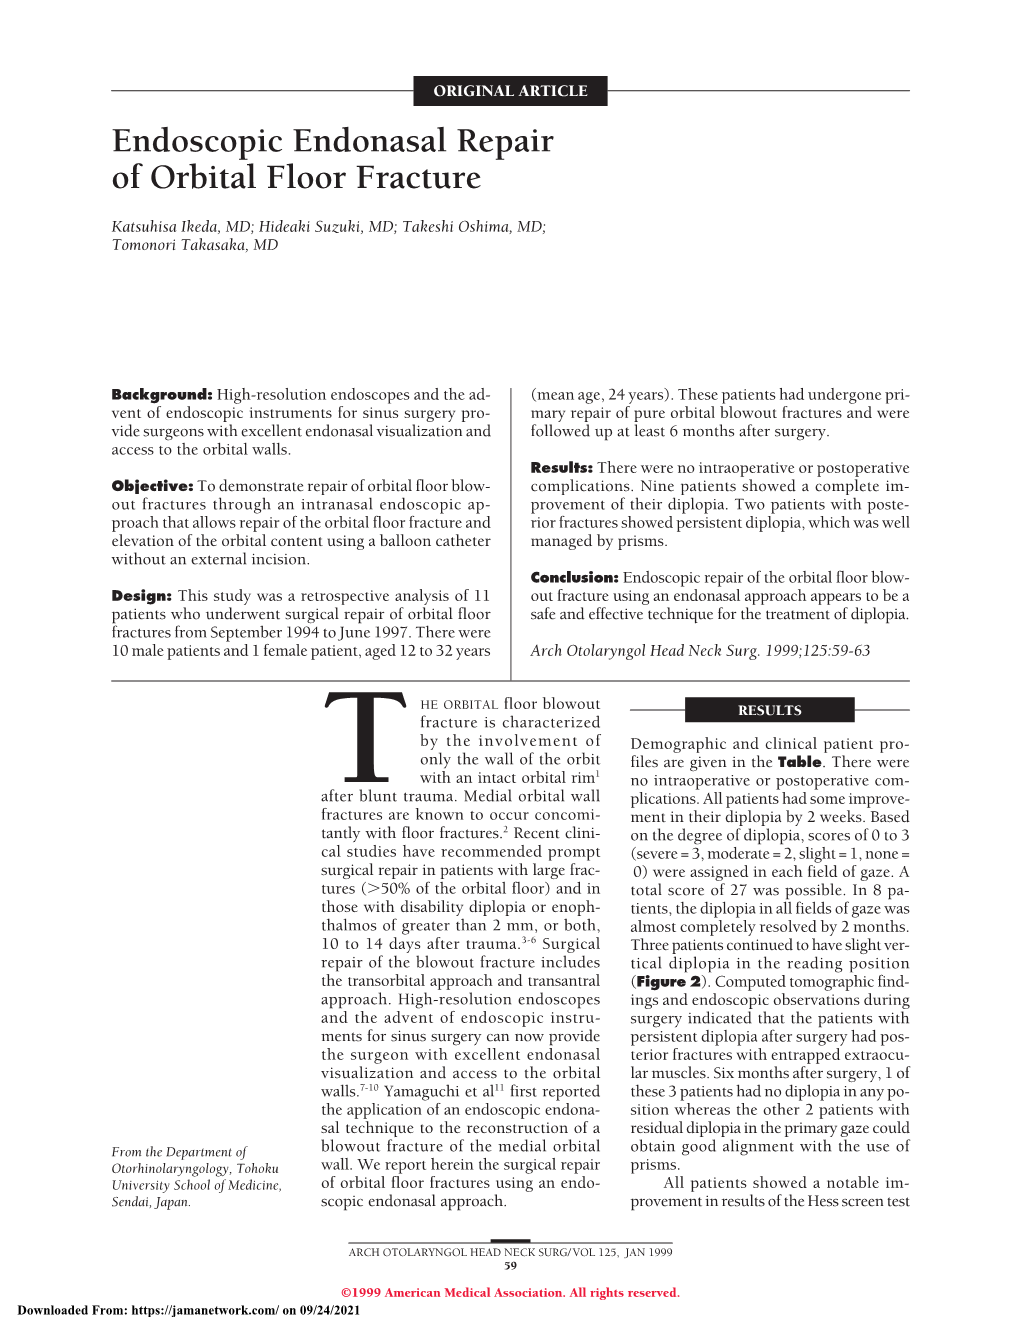 Endoscopic Endonasal Repair of Orbital Floor Fracture